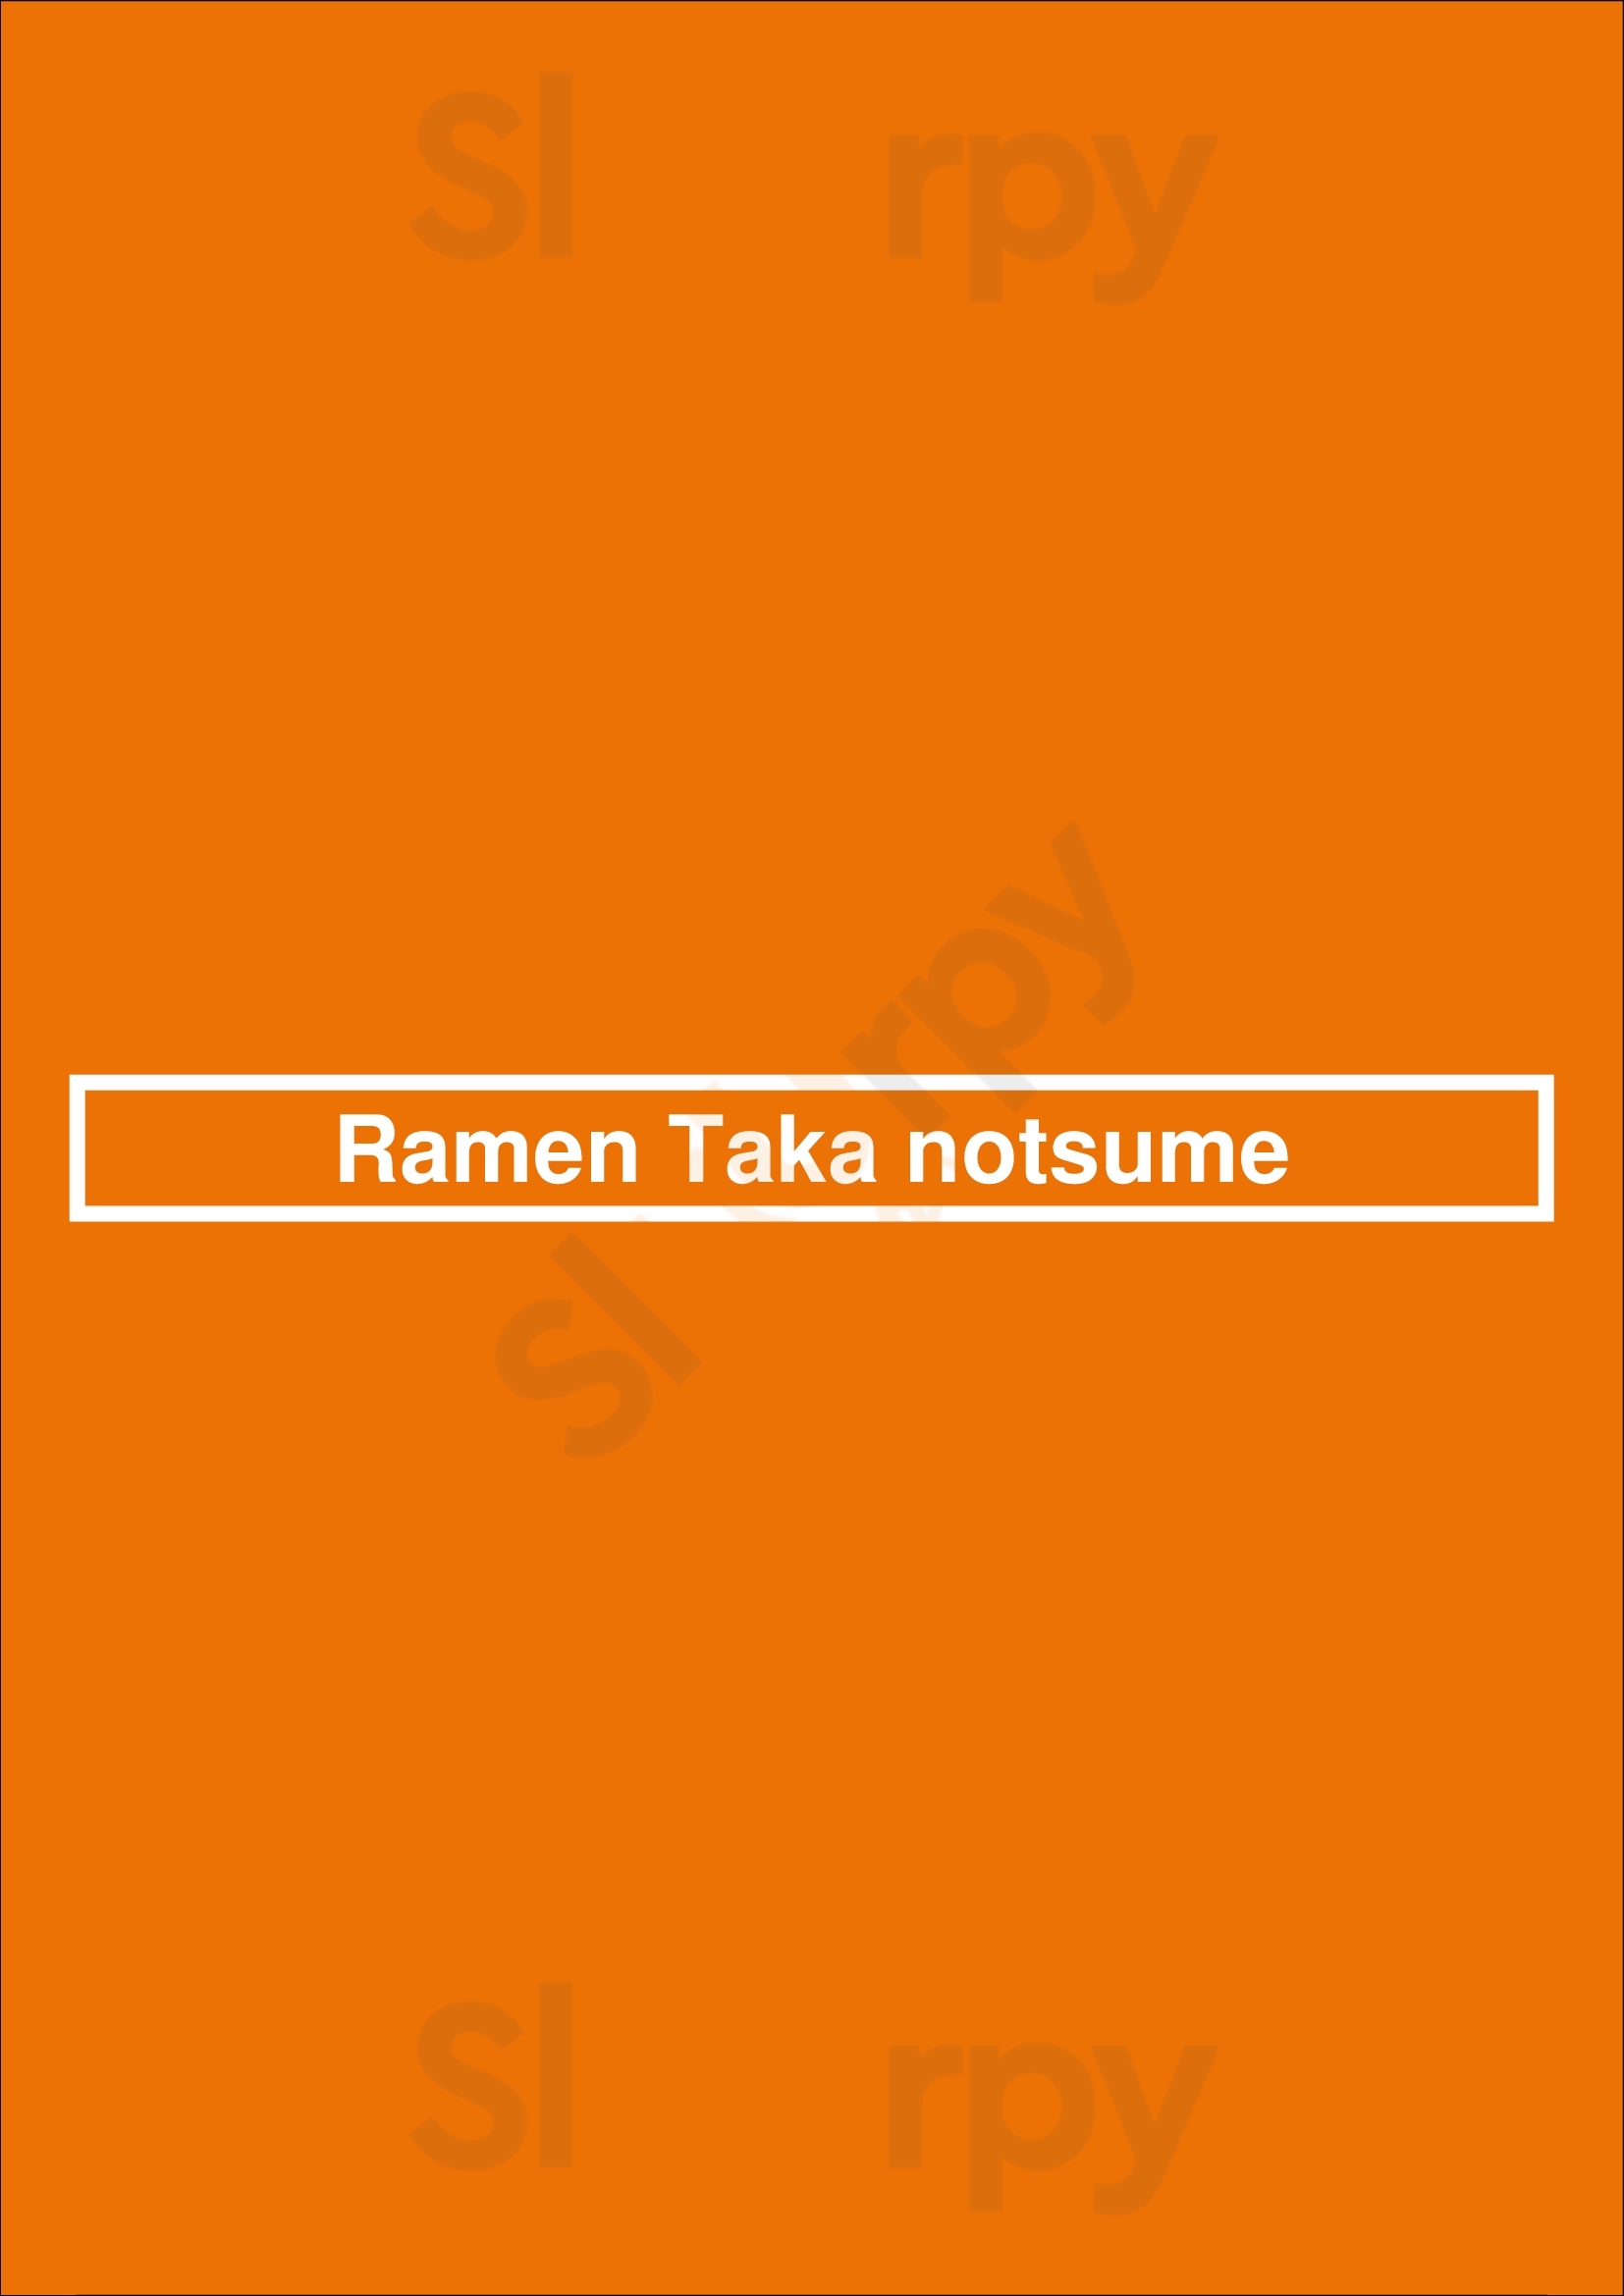 Ramen Taka Notsume Vancouver Menu - 1